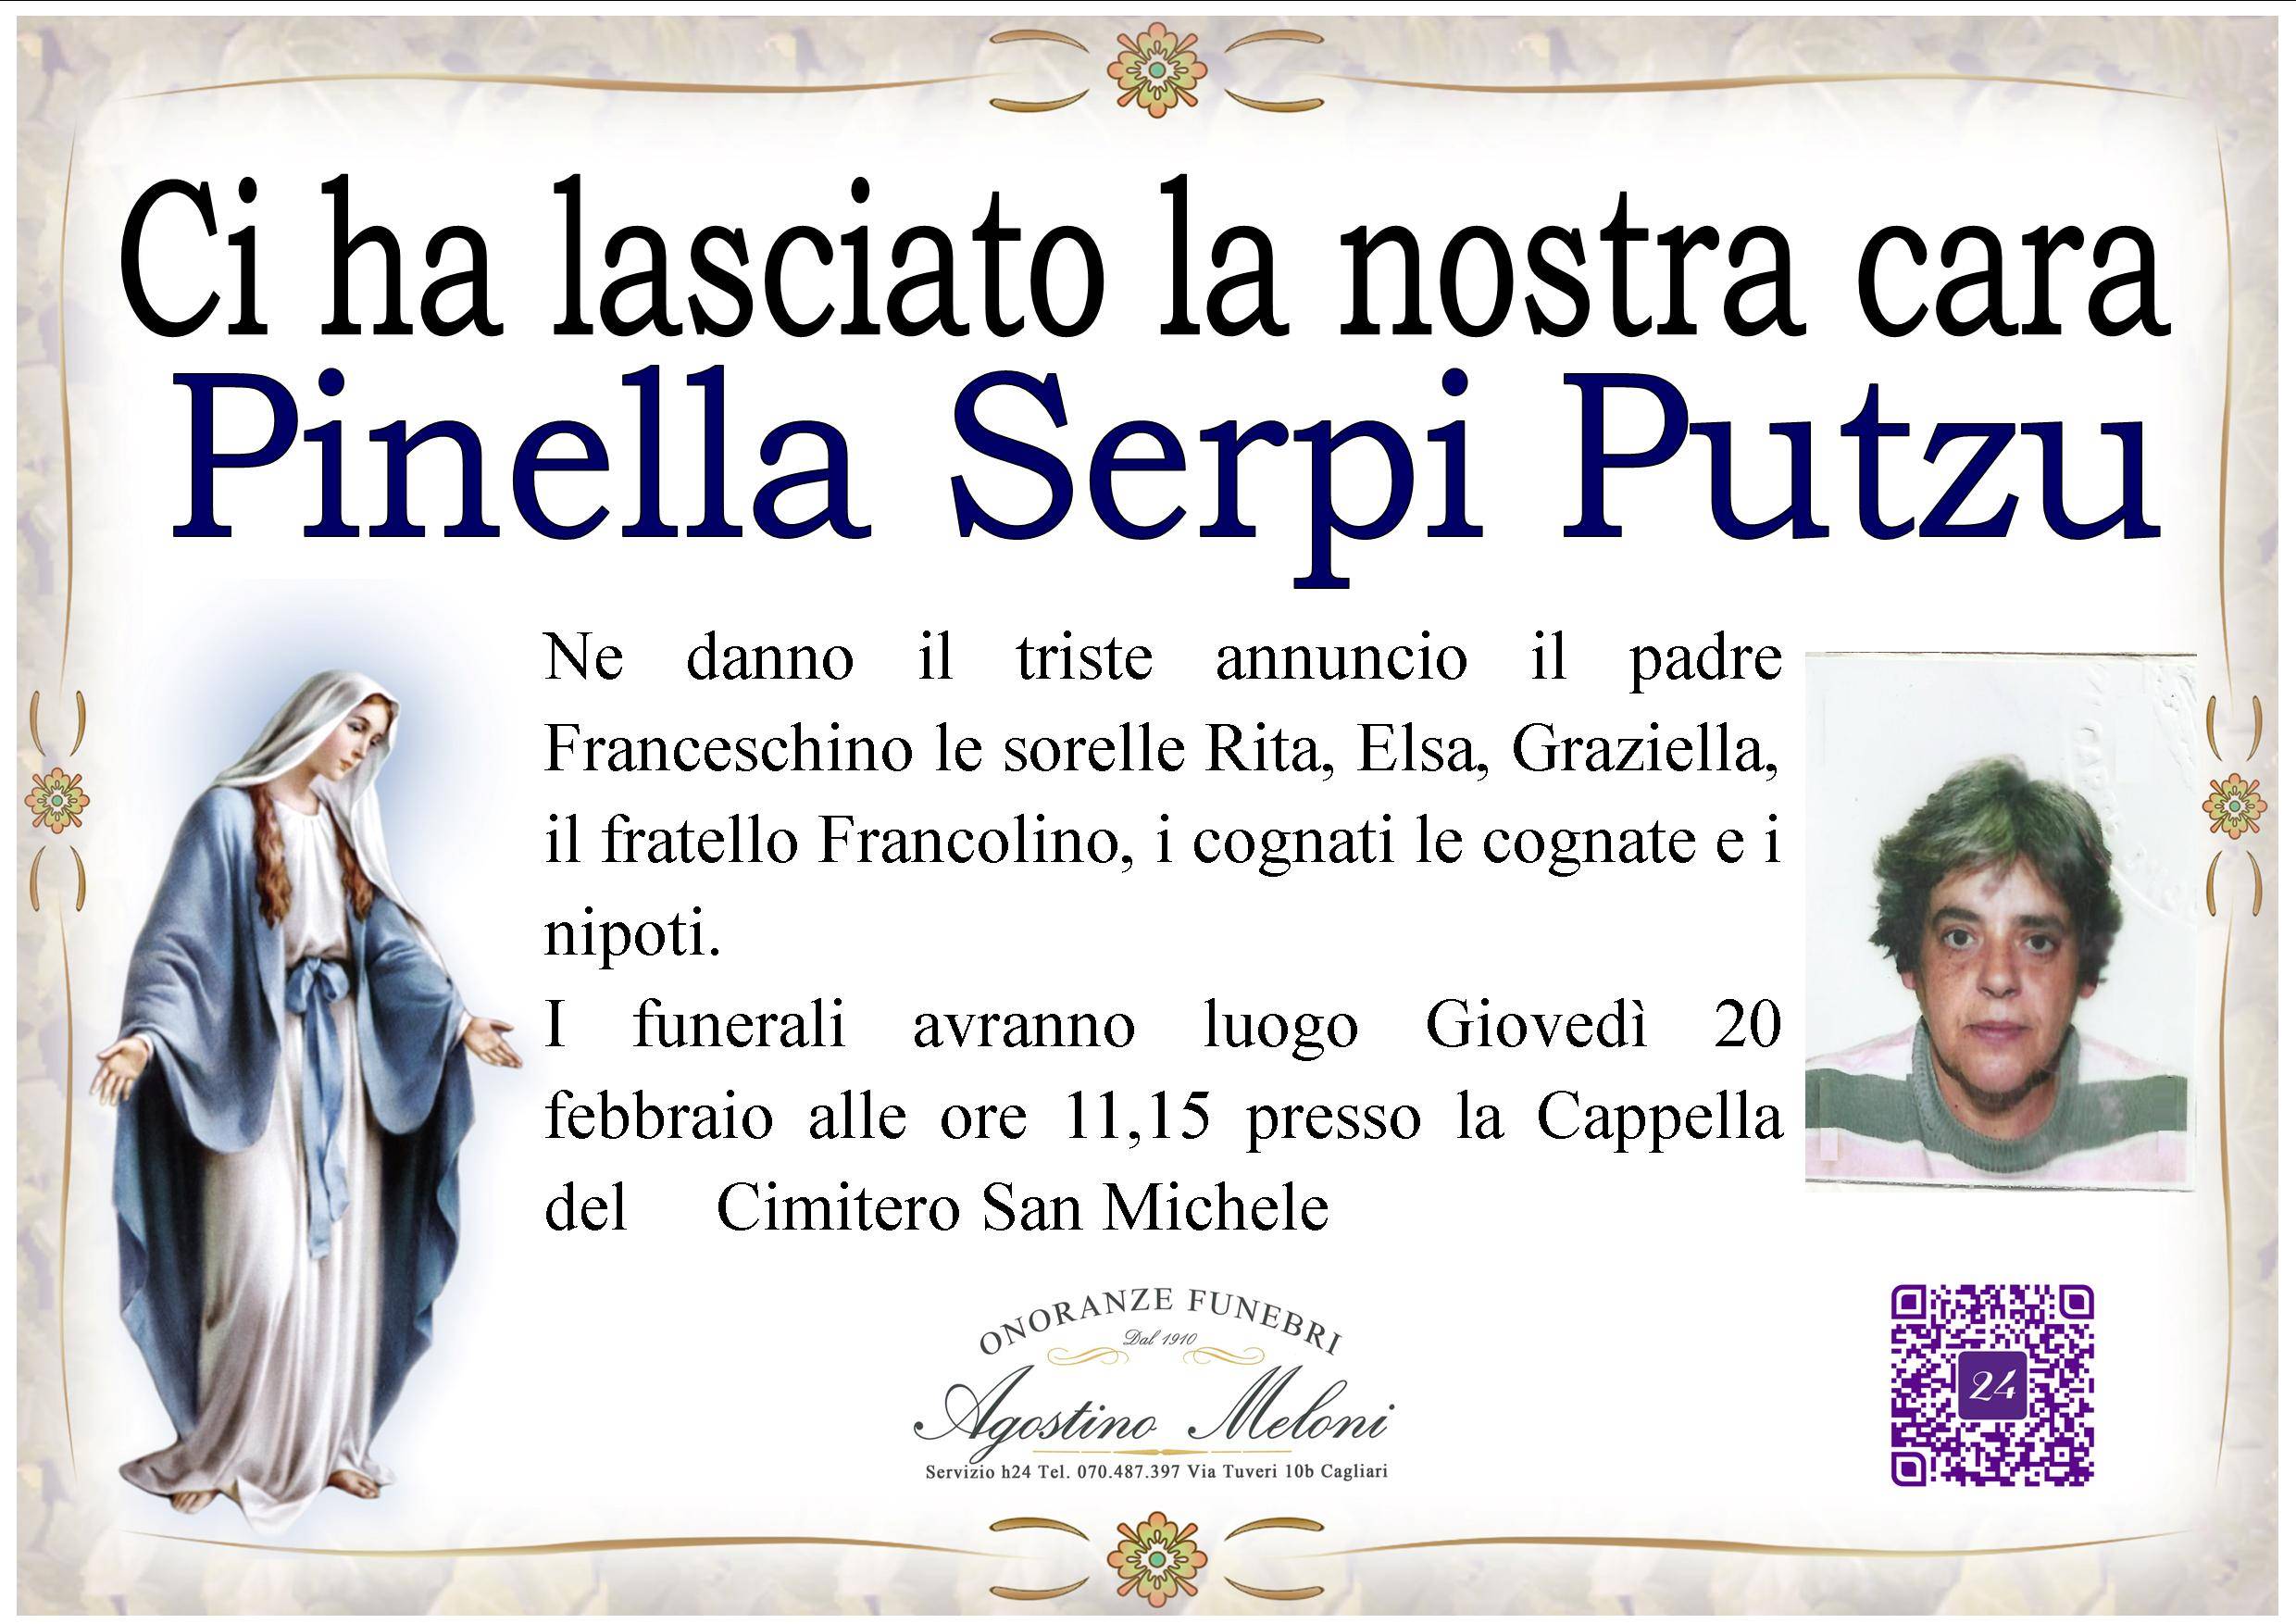 Pinella Serpi Putzu